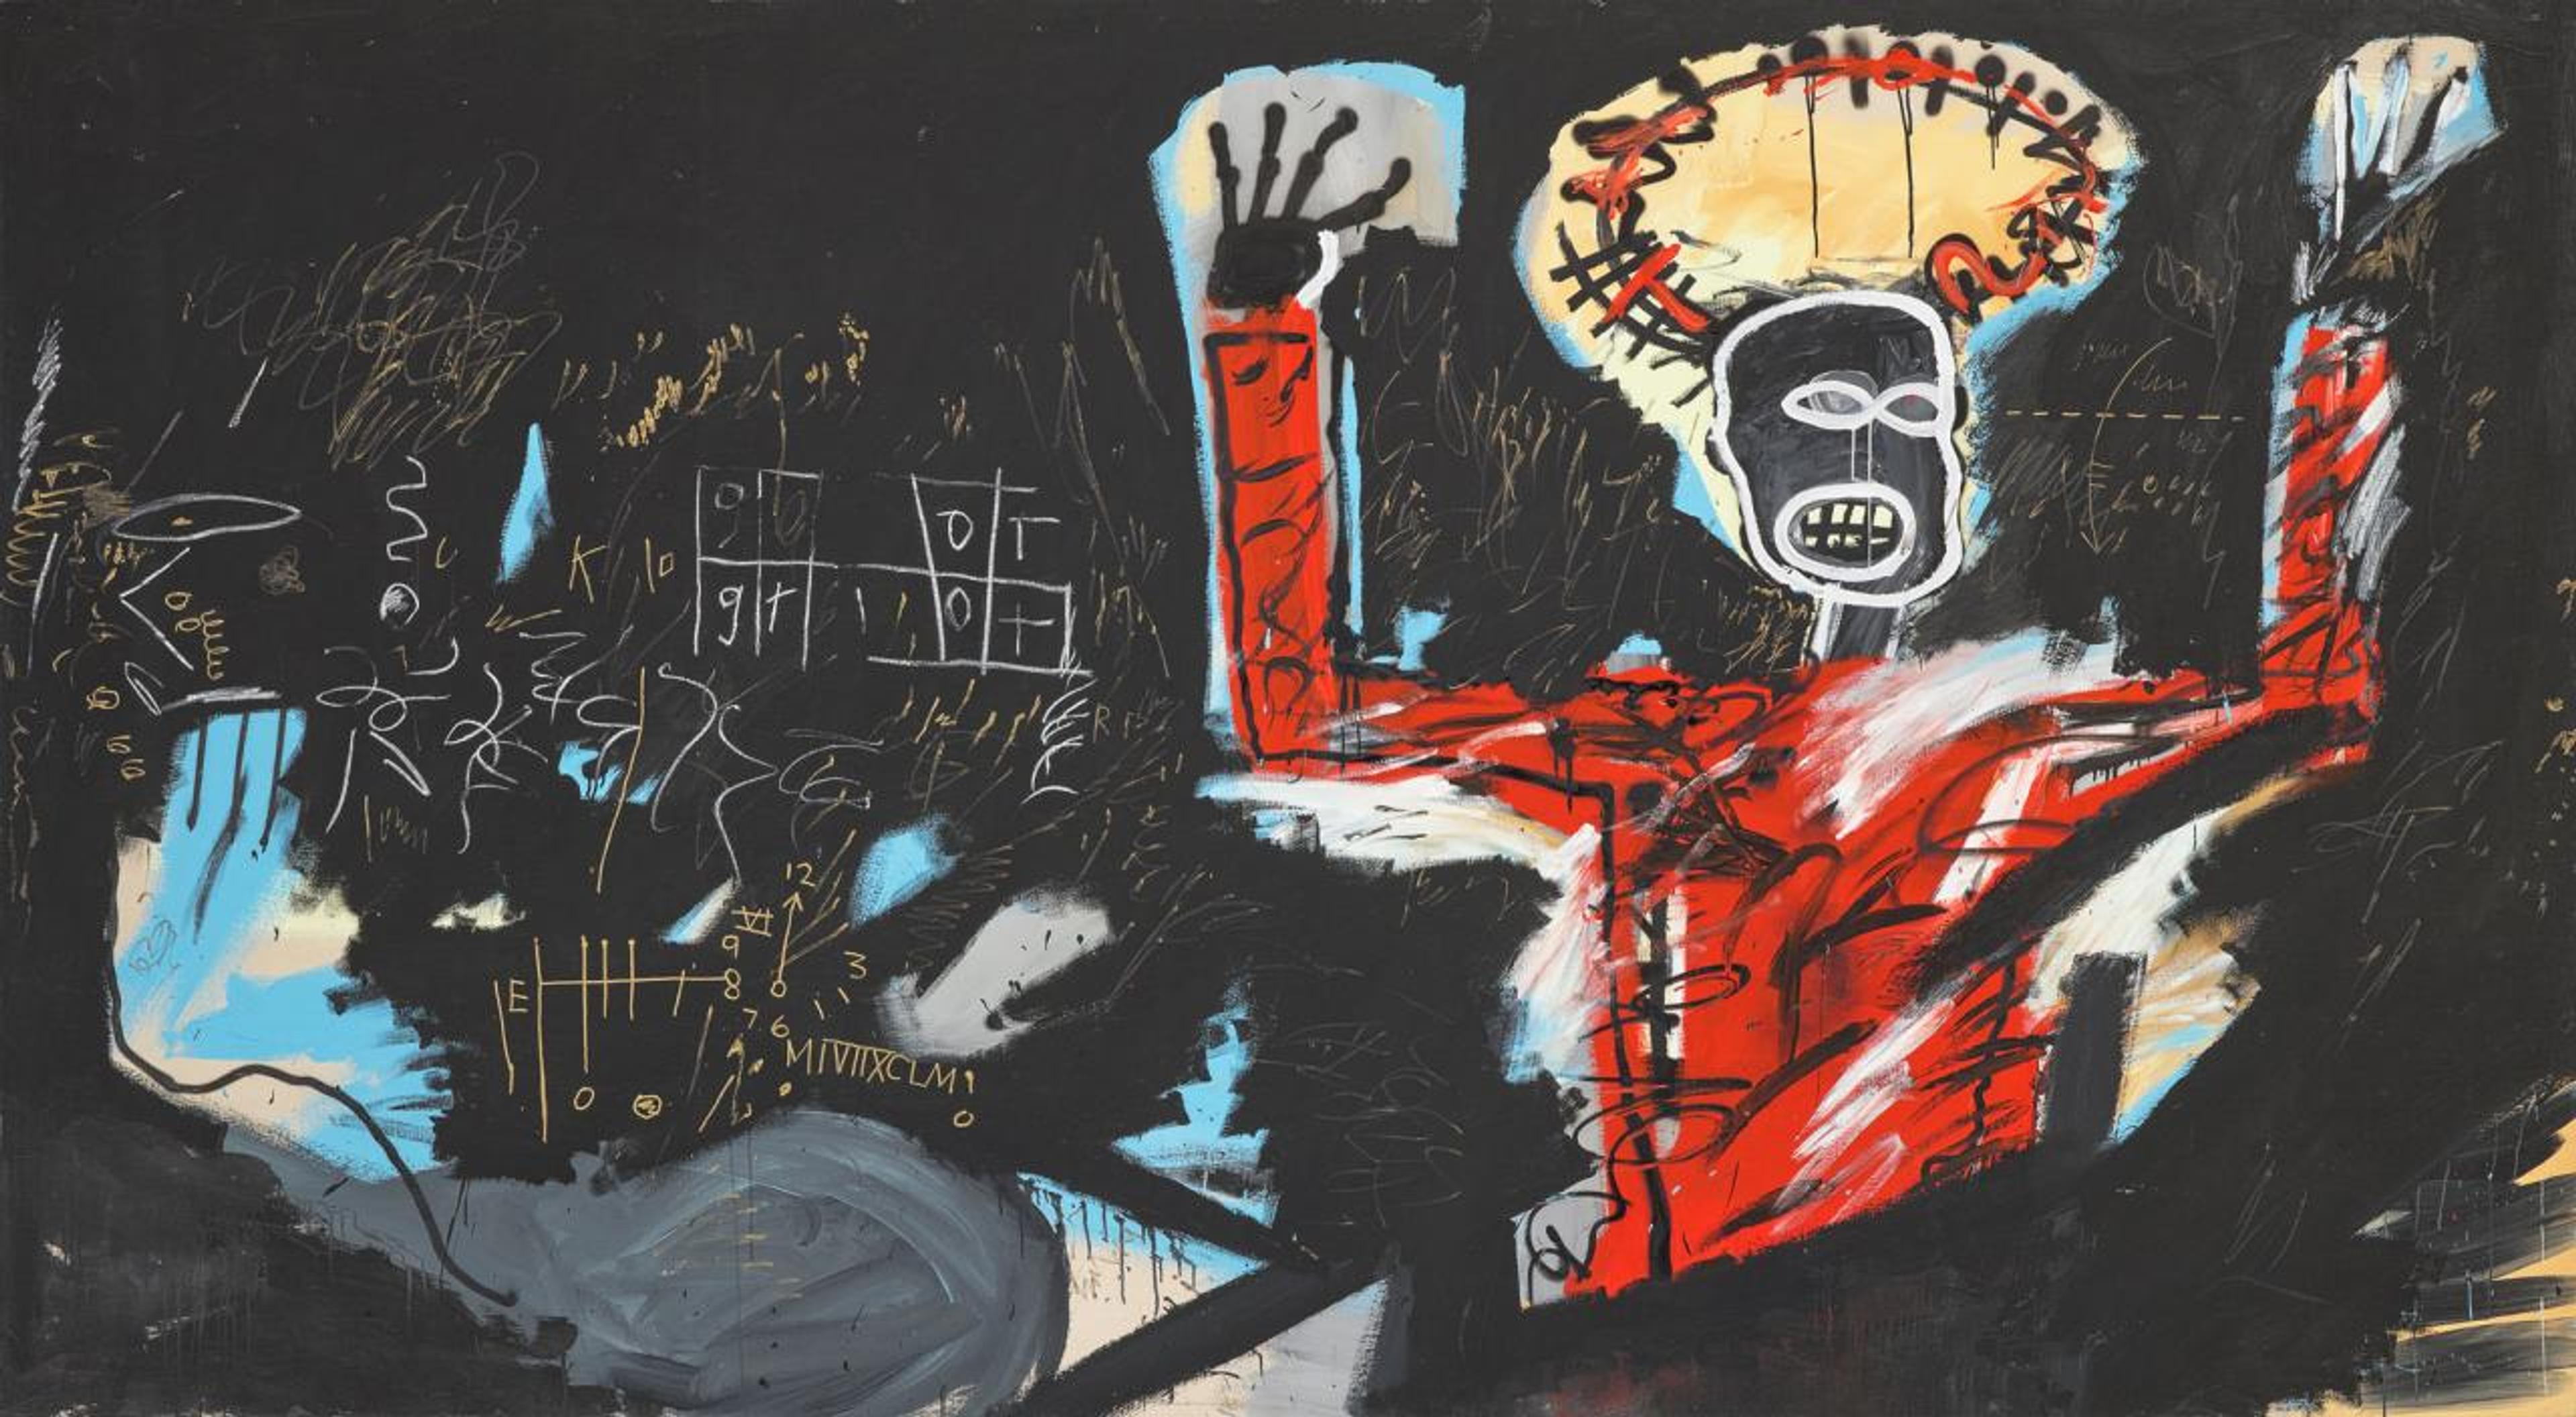 Jean-Michel Basquiat, Profit 1, 1982, acrylic, oil stick, marker, and spray paint on canvas, 220 x 400 cm